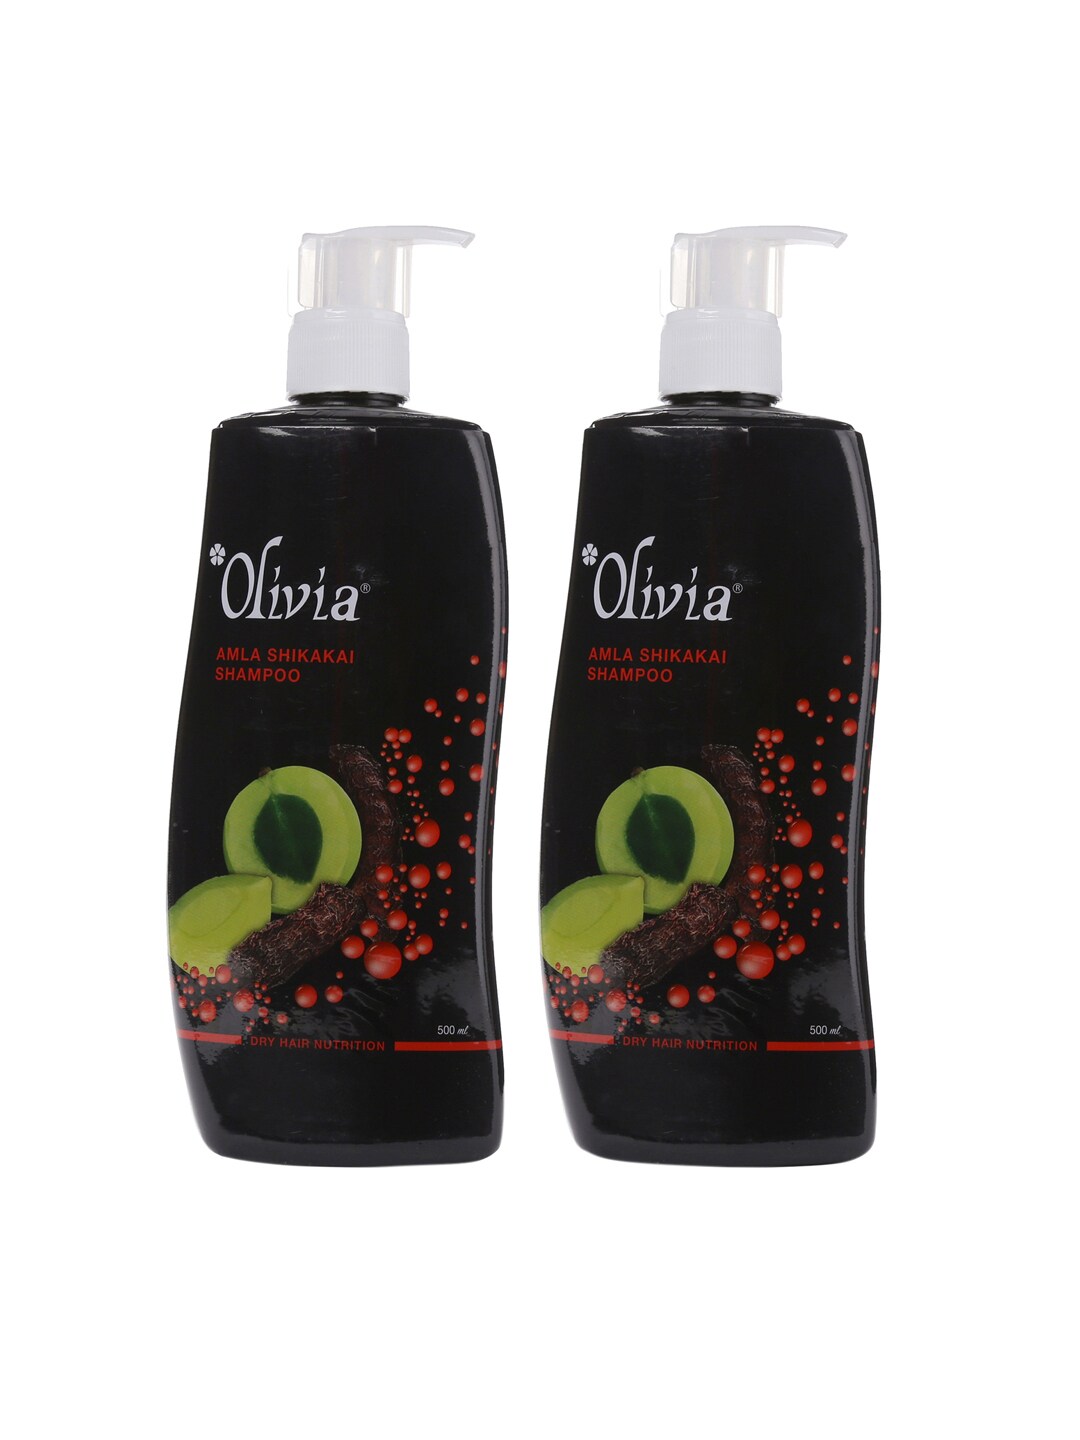 Olivia Set of 2 Amla Shikakai Herbal Shampoos 500ml Each Price in India